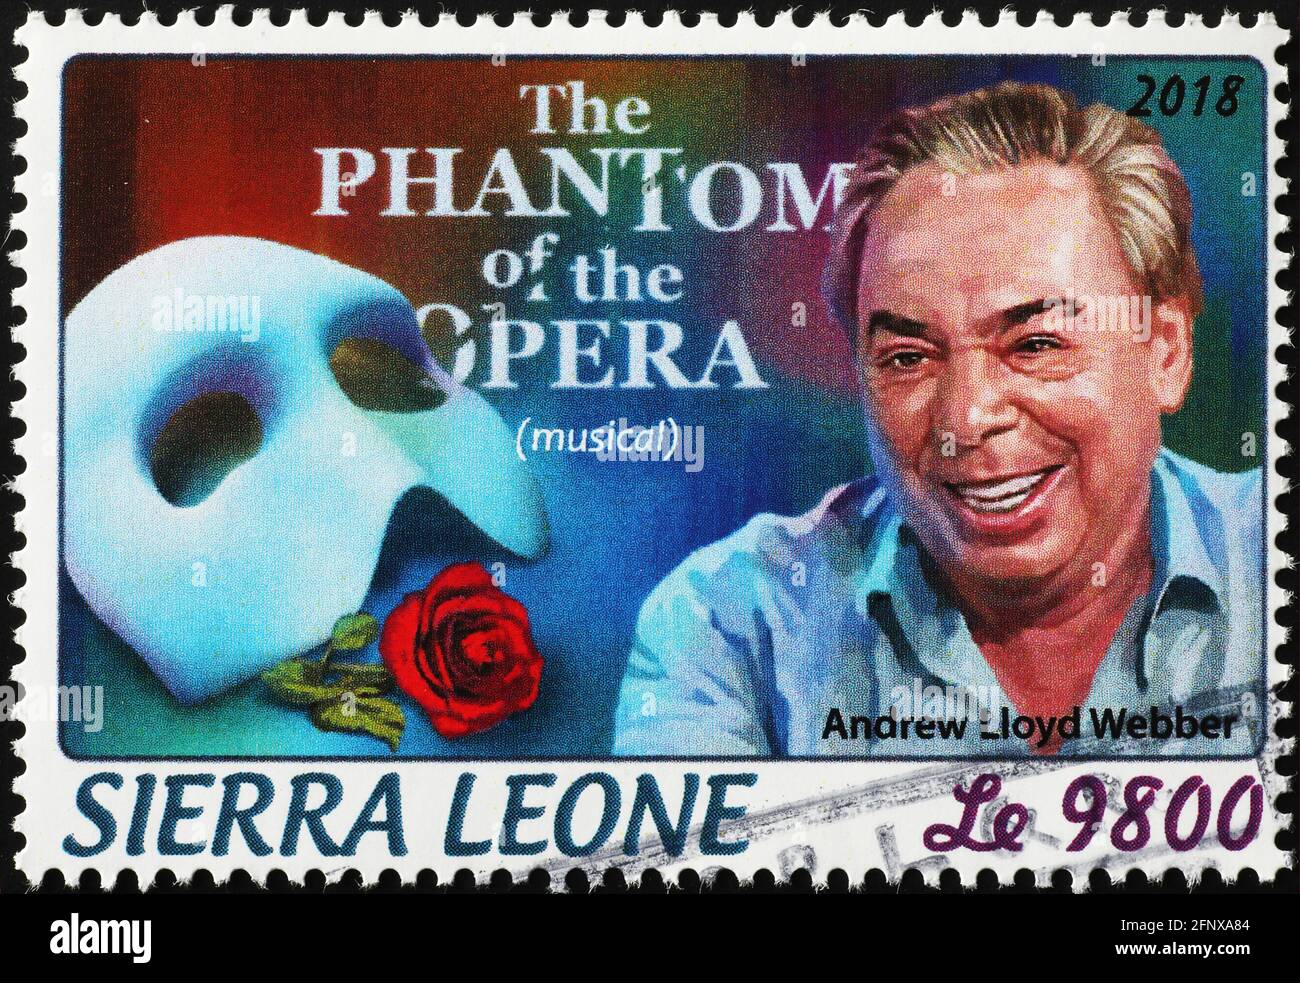 Andrew Lloyd Webber portrait on postage stamp Stock Photo